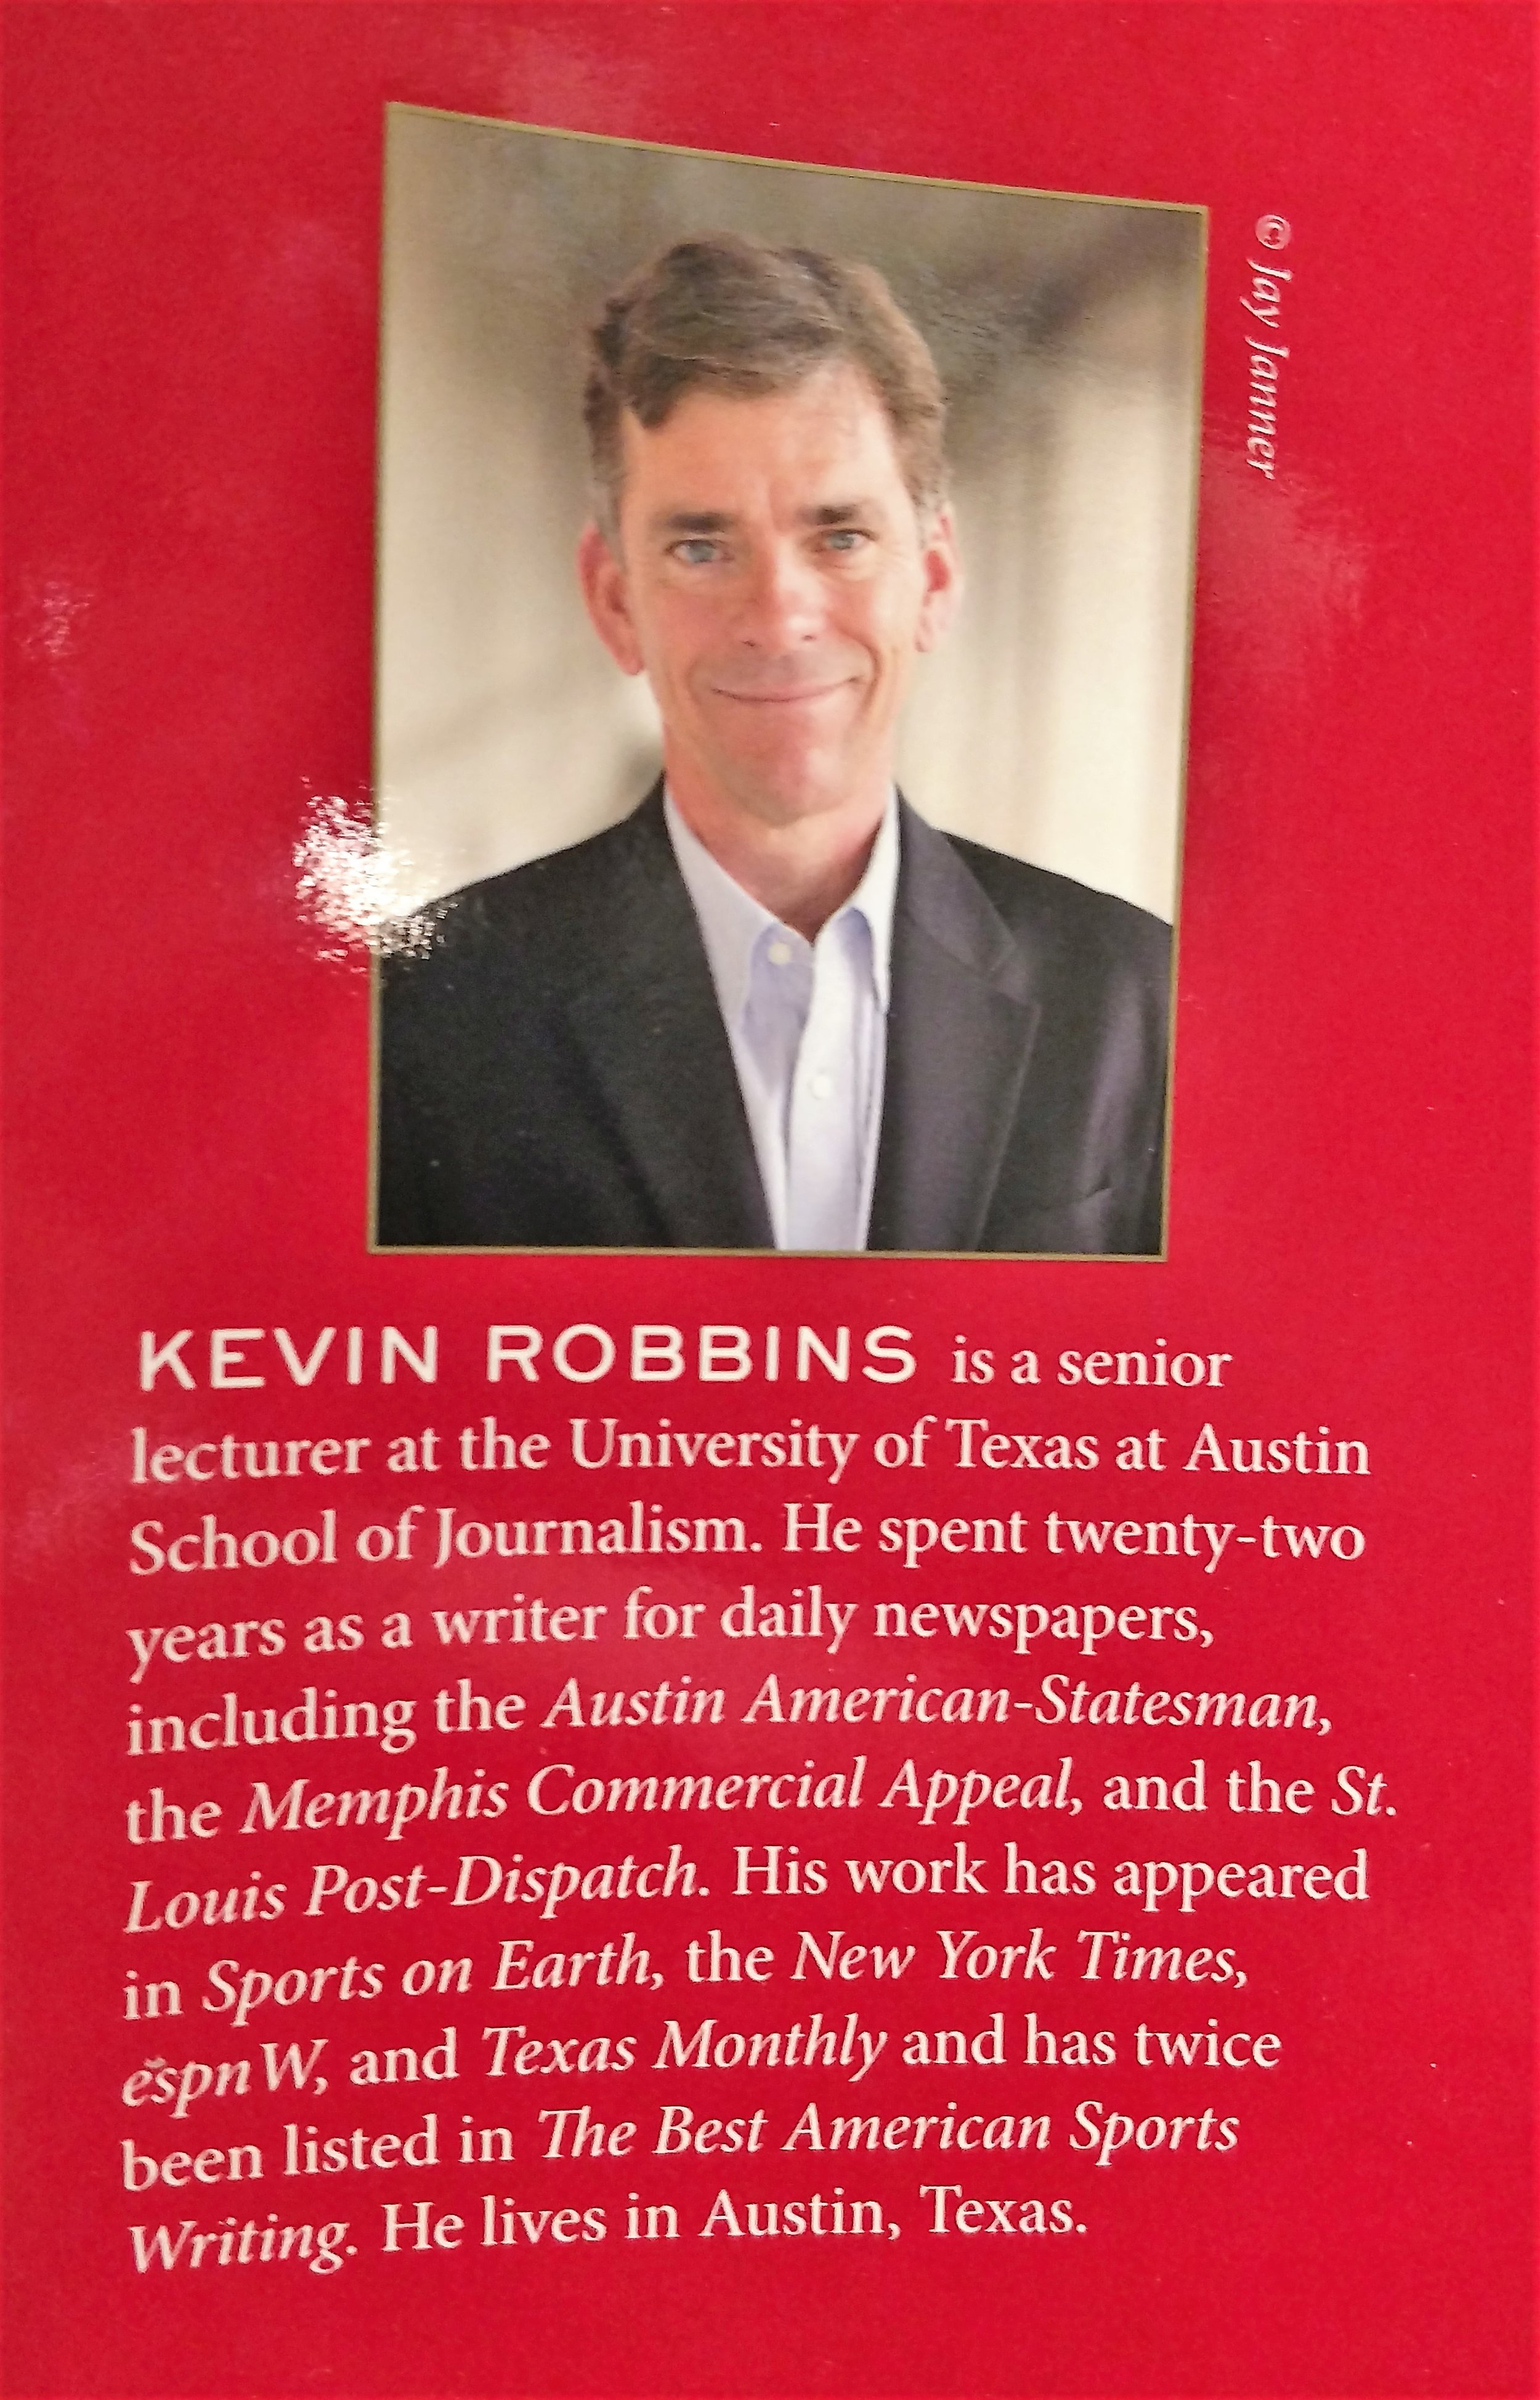 Kevin Robbins